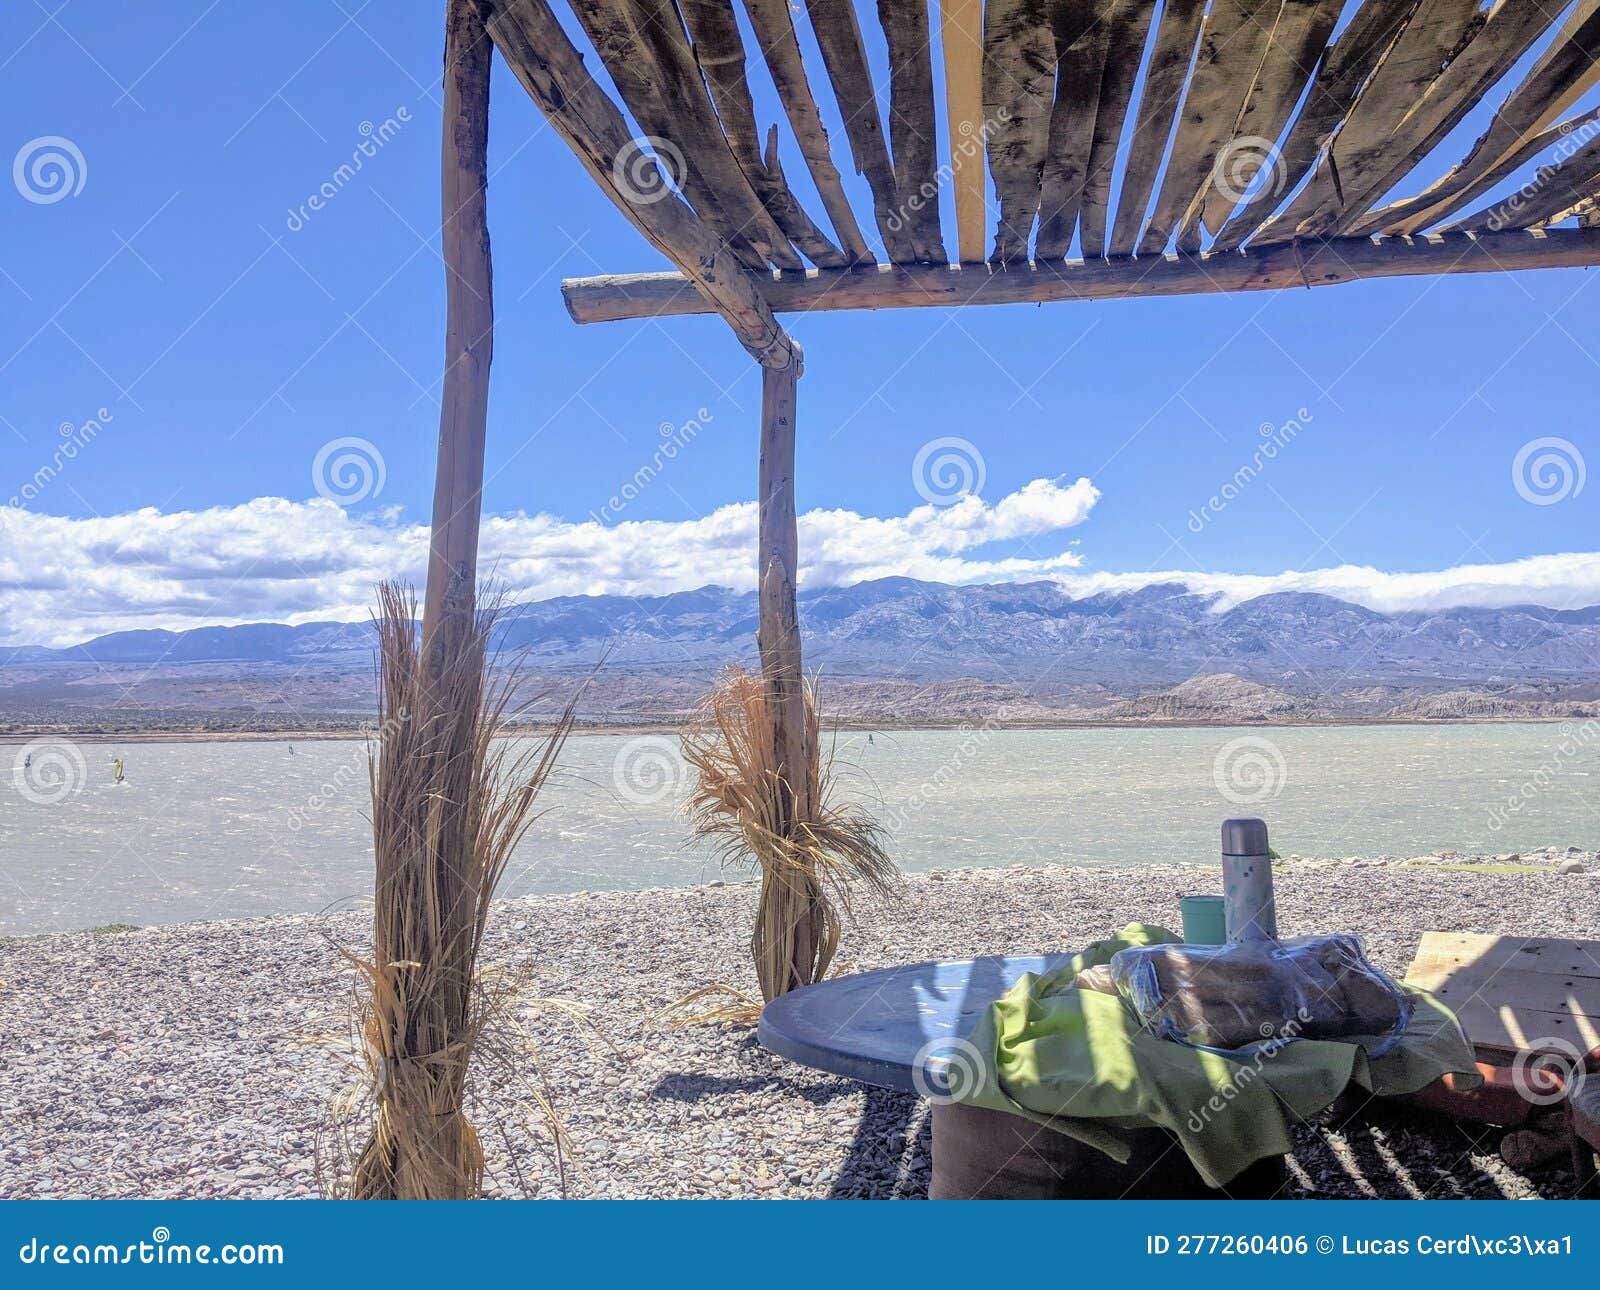 scenic view of cuesta del viento dam beach and parador in rodeo, san juan, argentina